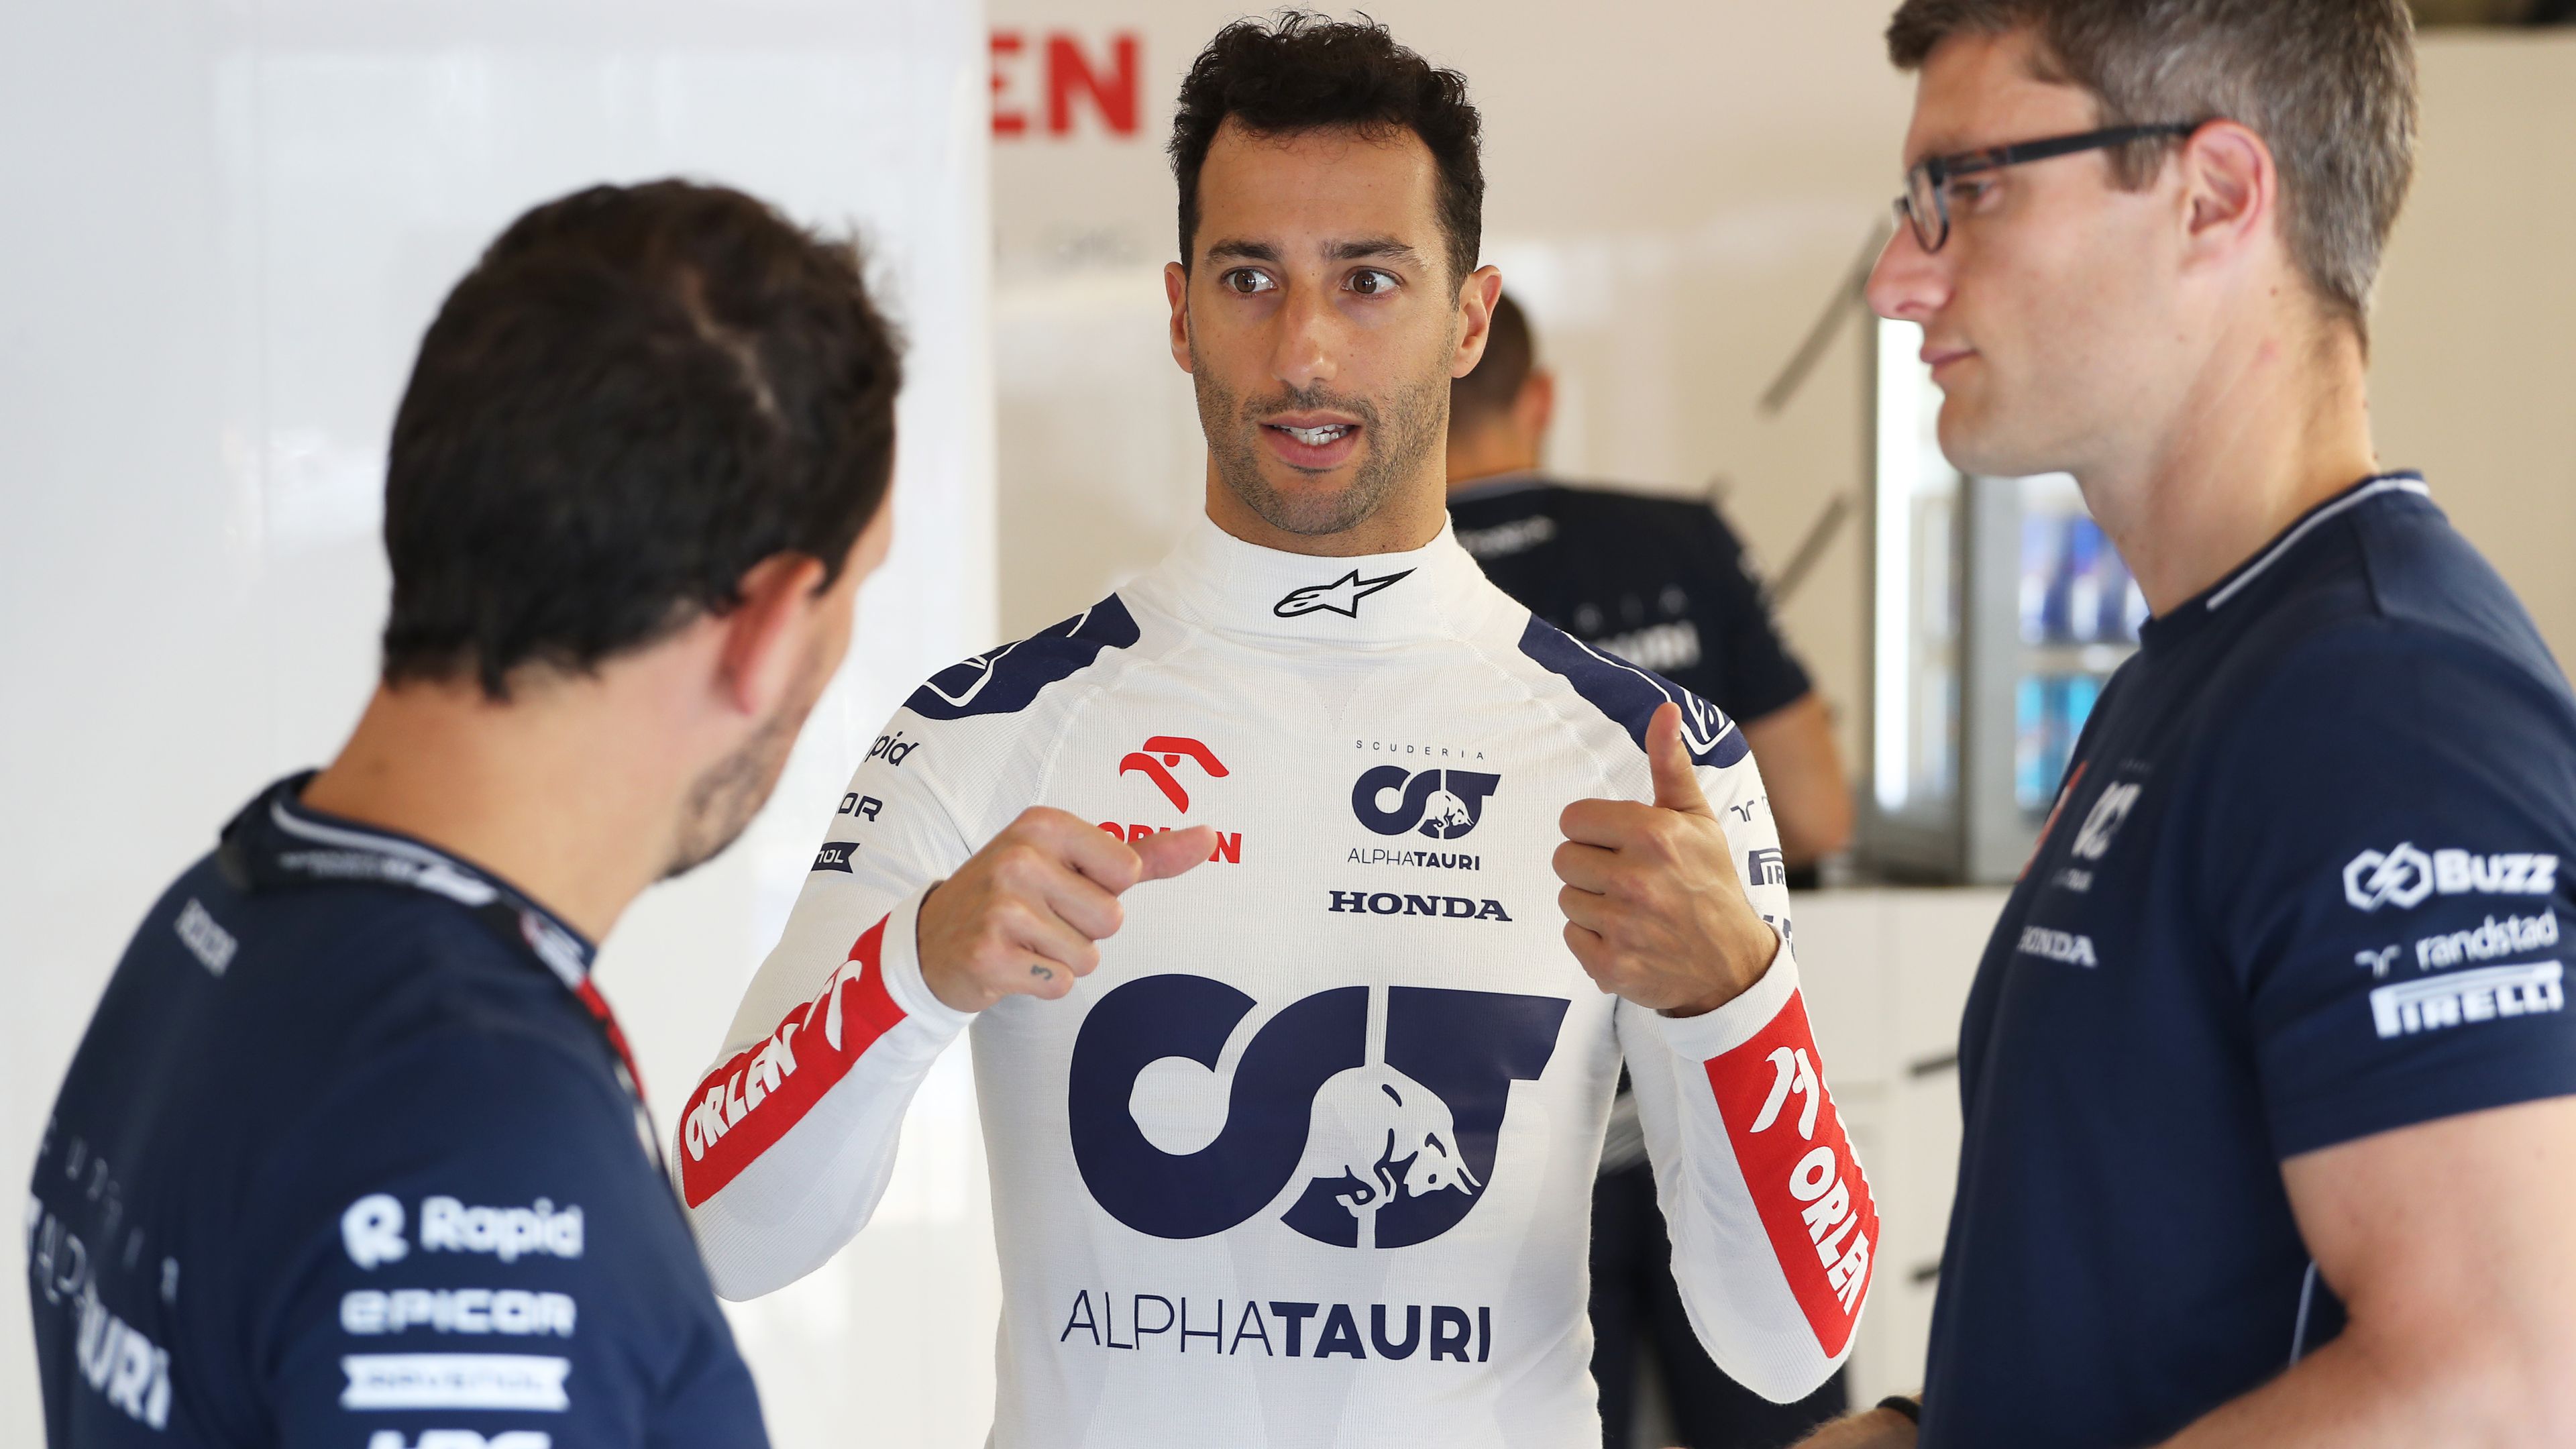 Daniel Ricciardo of Australia talks with the Scuderia AlphaTauri team in the garage during previews at Hungary.